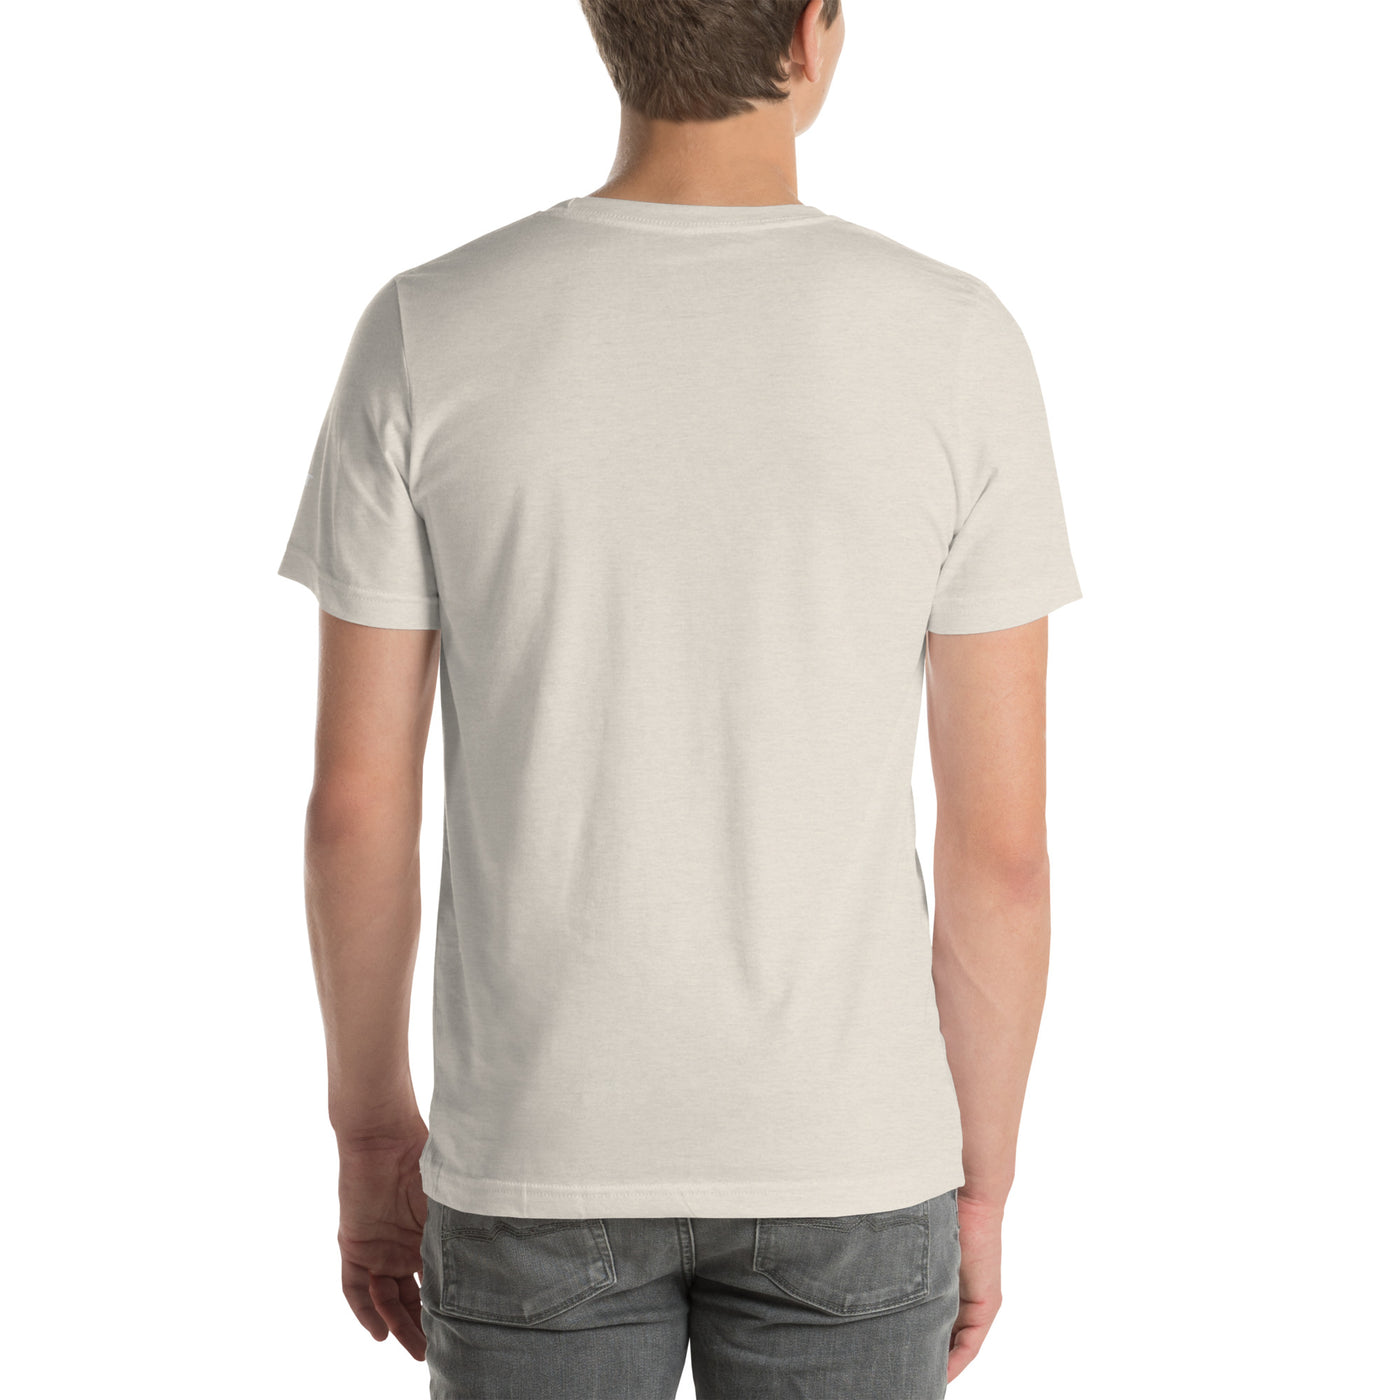 Forex Addict ( RK ) - Unisex t-shirt